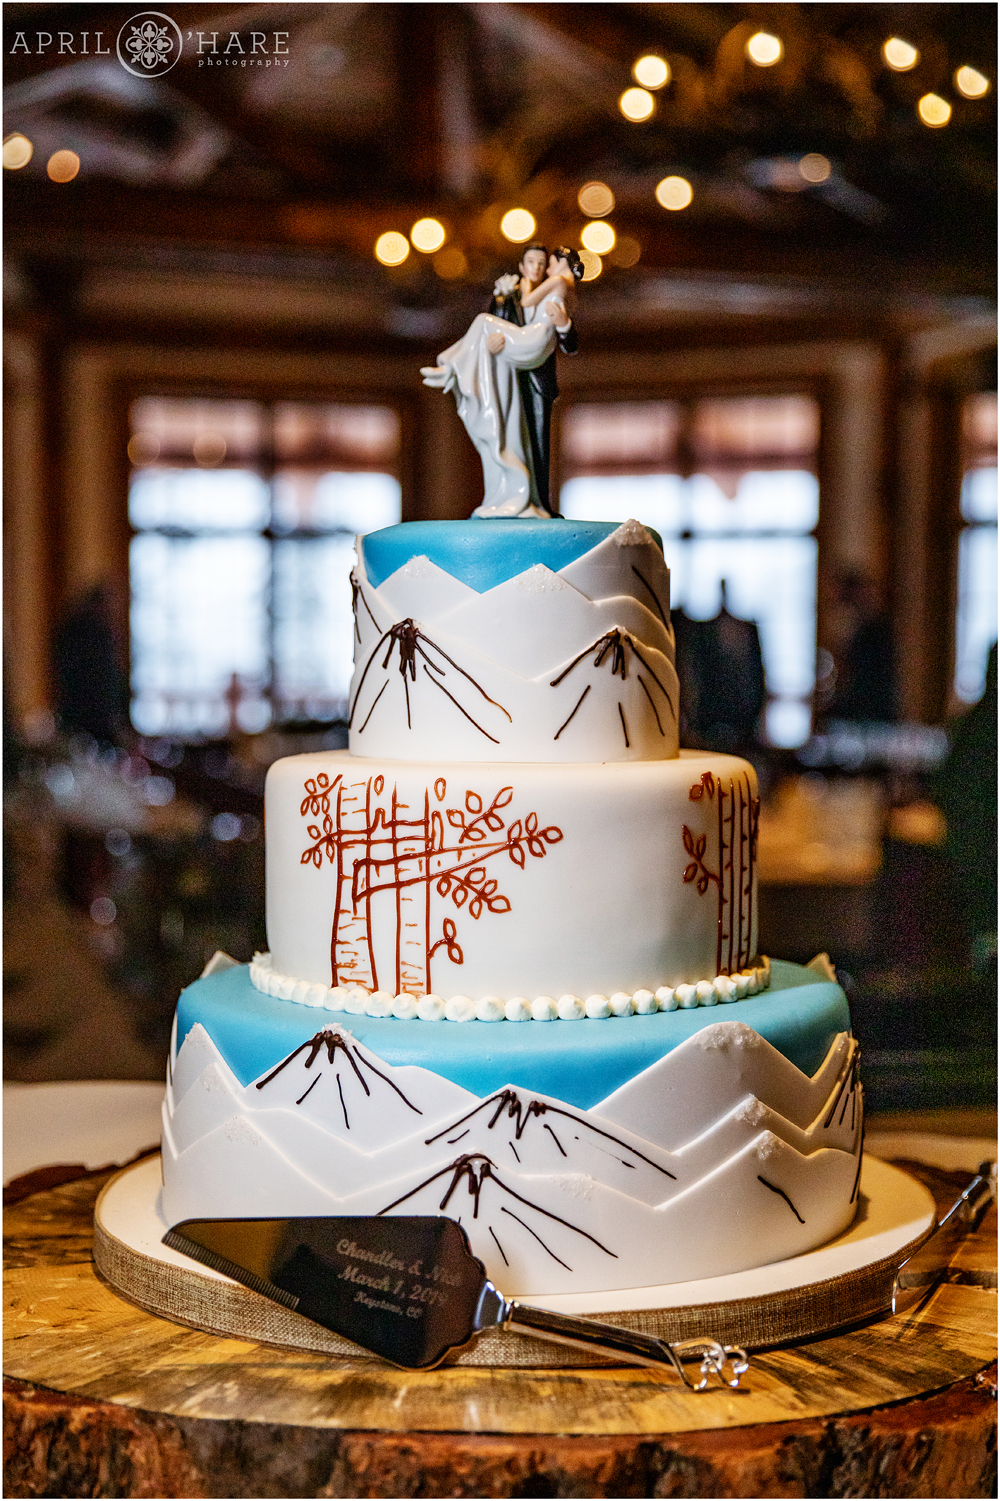 Three tiered wedding cake at Alpenglow Stube Keystone Resort in CO